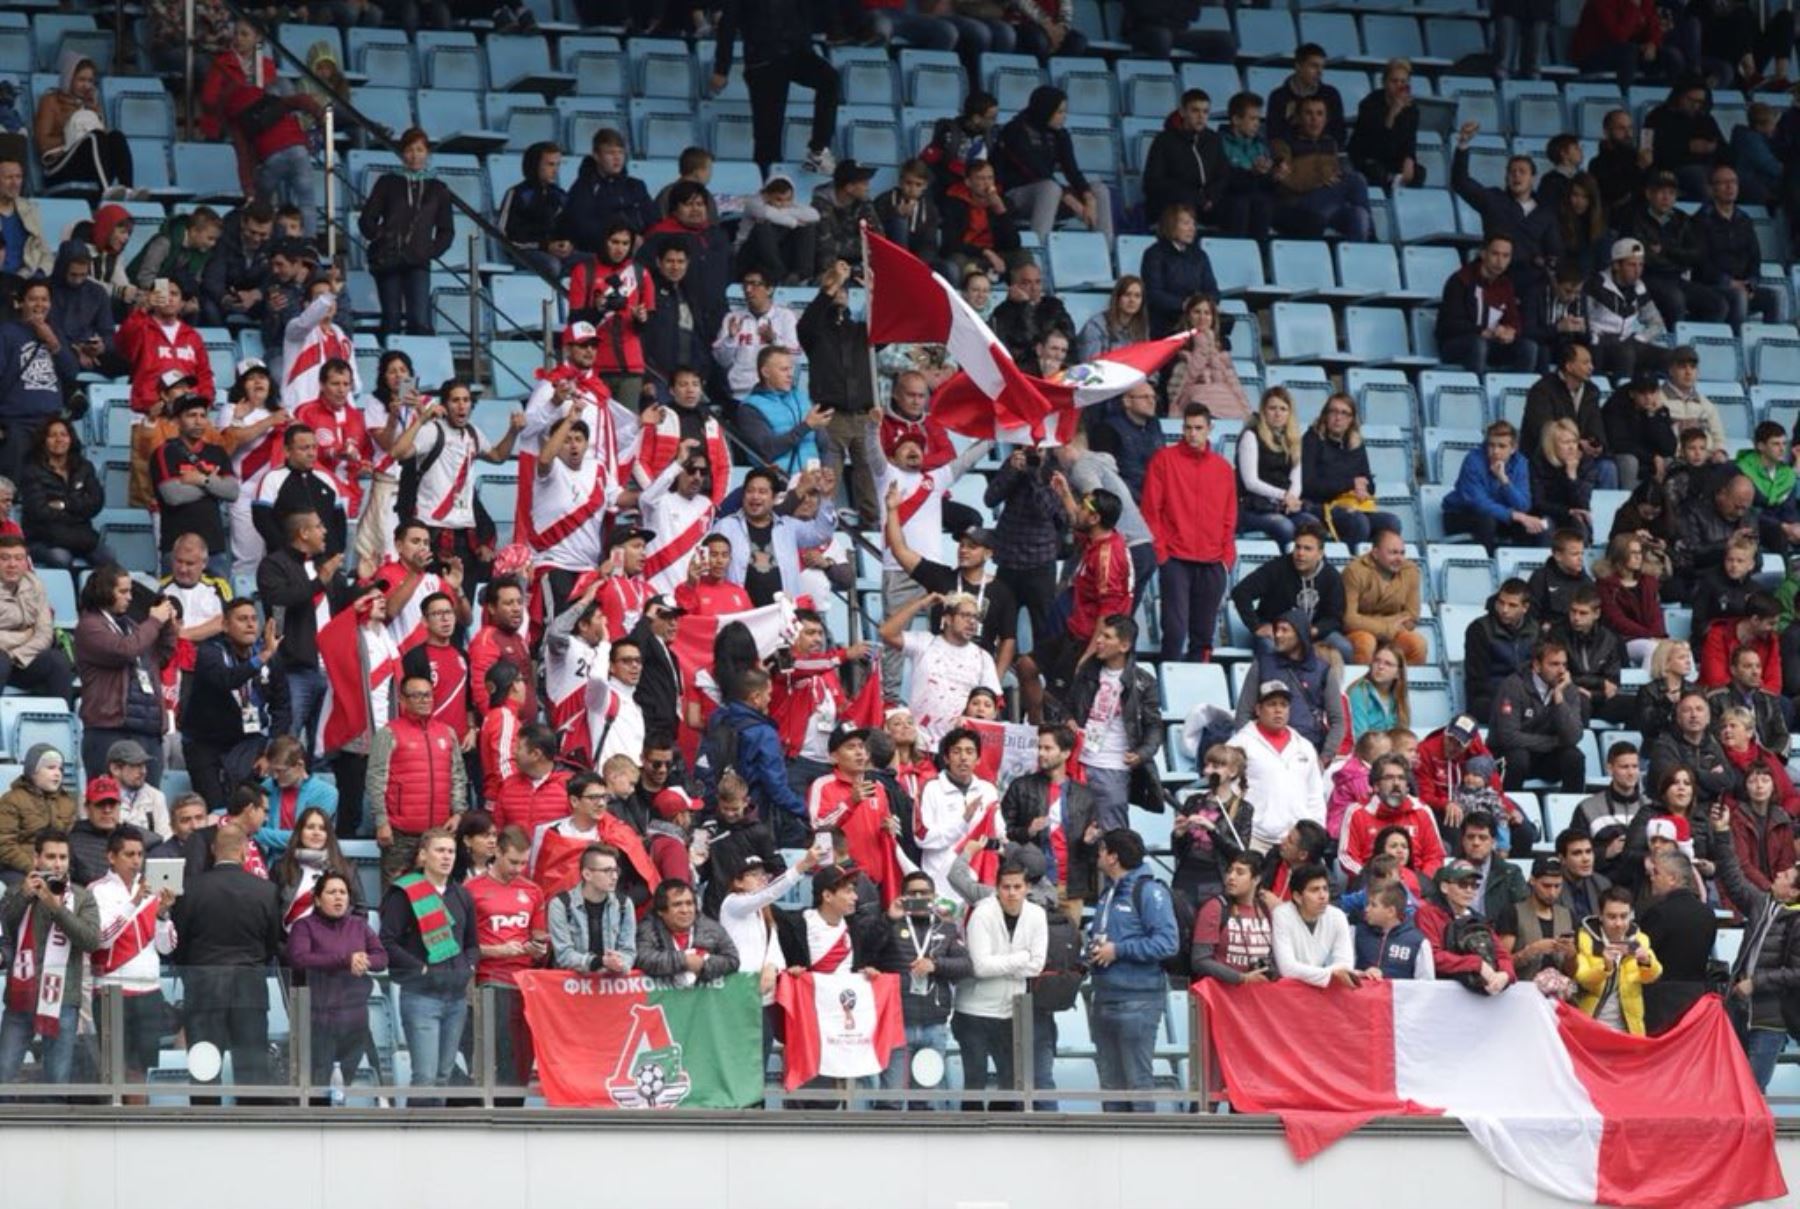 Hinchas peruanos apoyaron en todo momento a la selección nacional